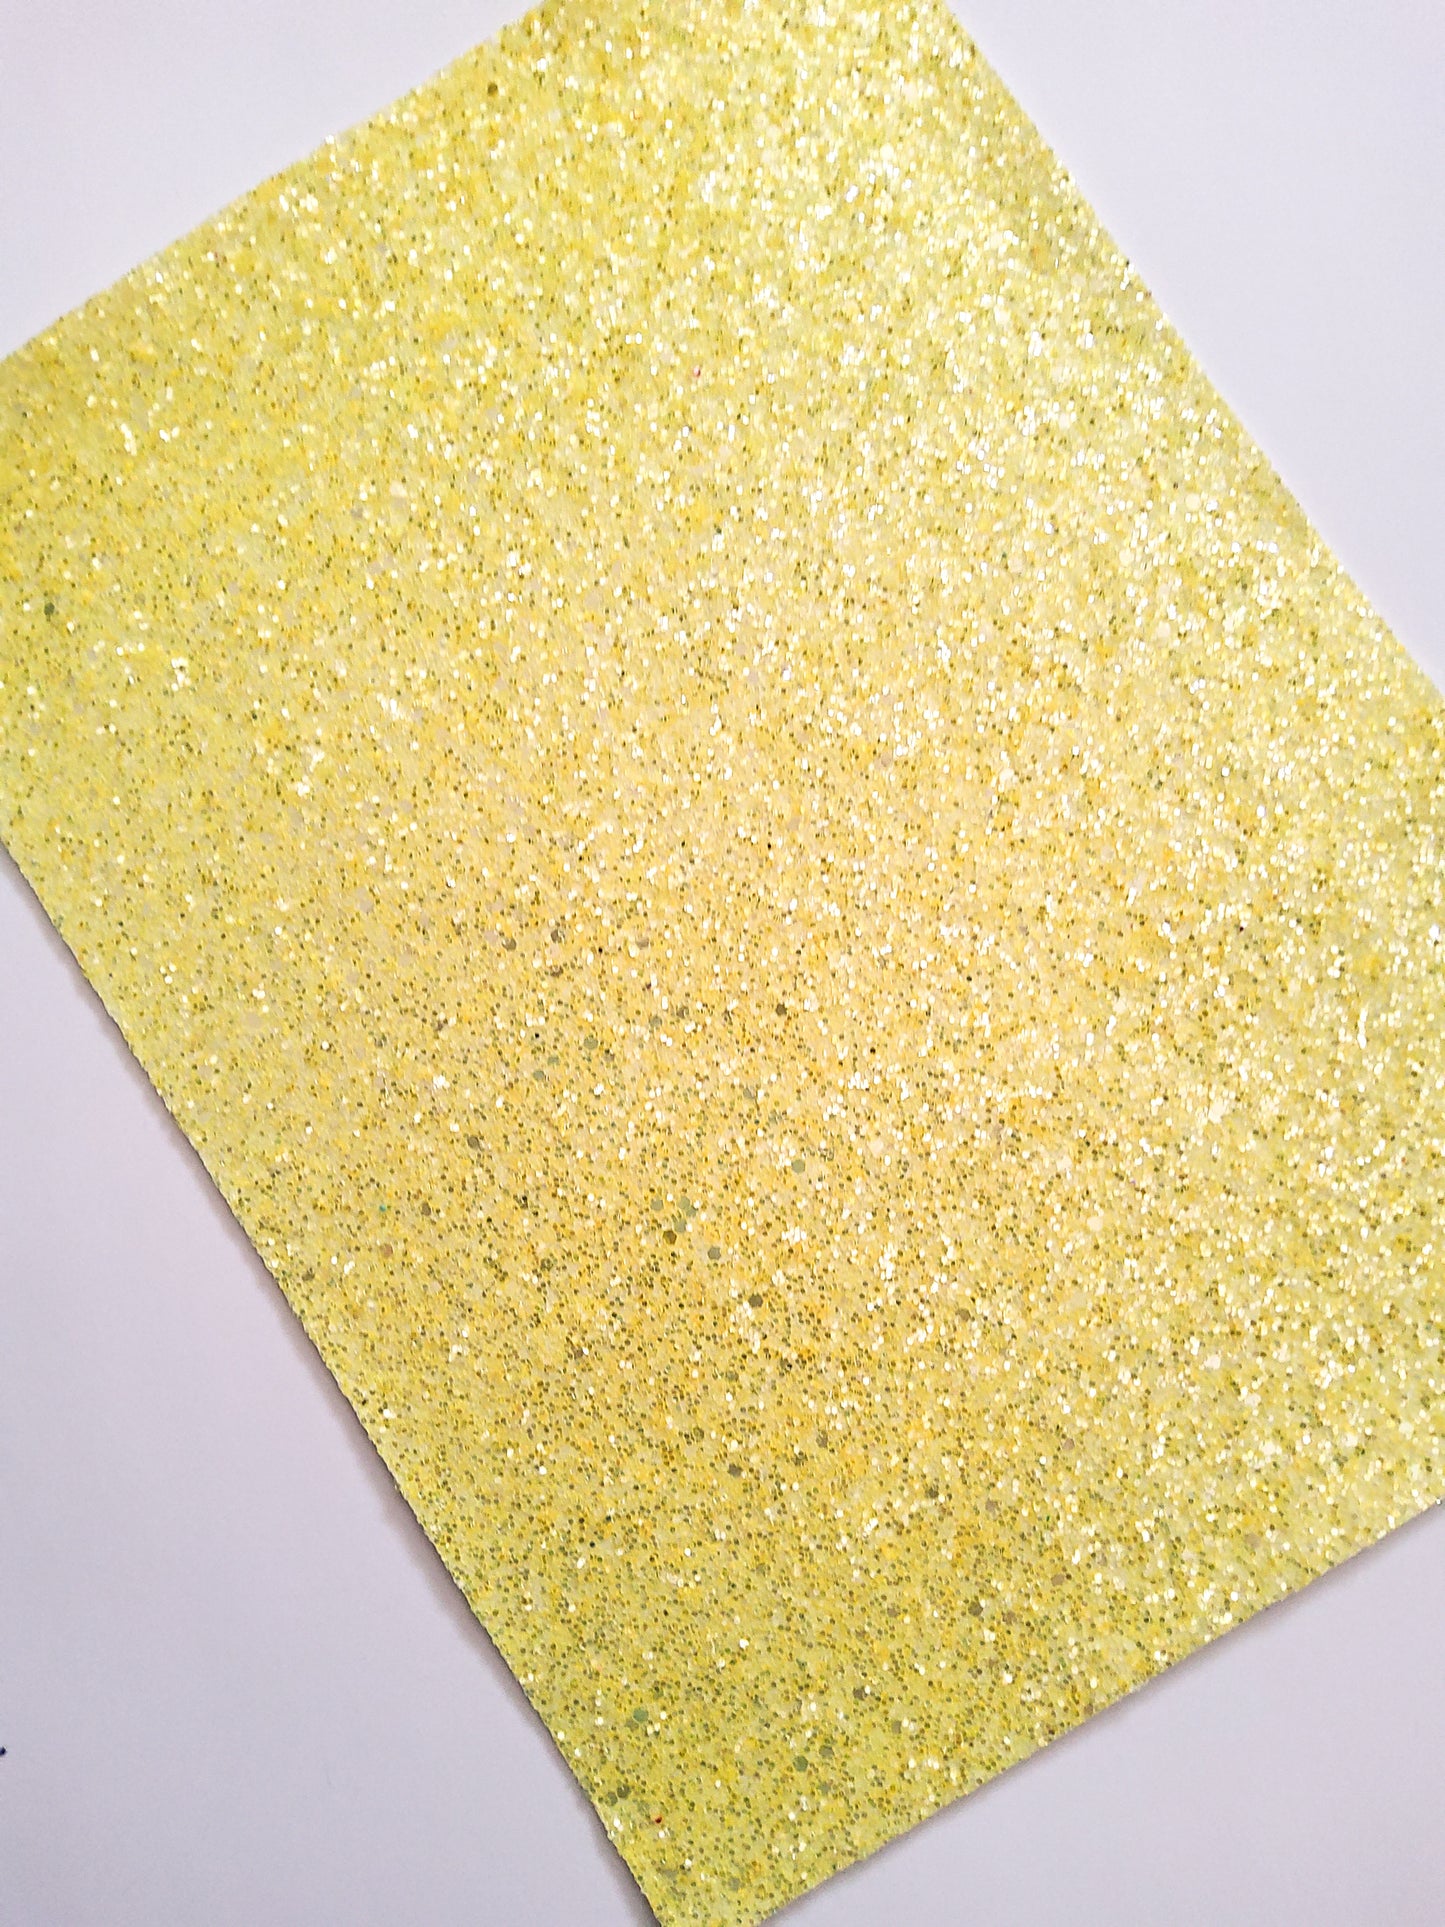 Neon Yellow Chunky Glitter 9x12 faux leather sheet